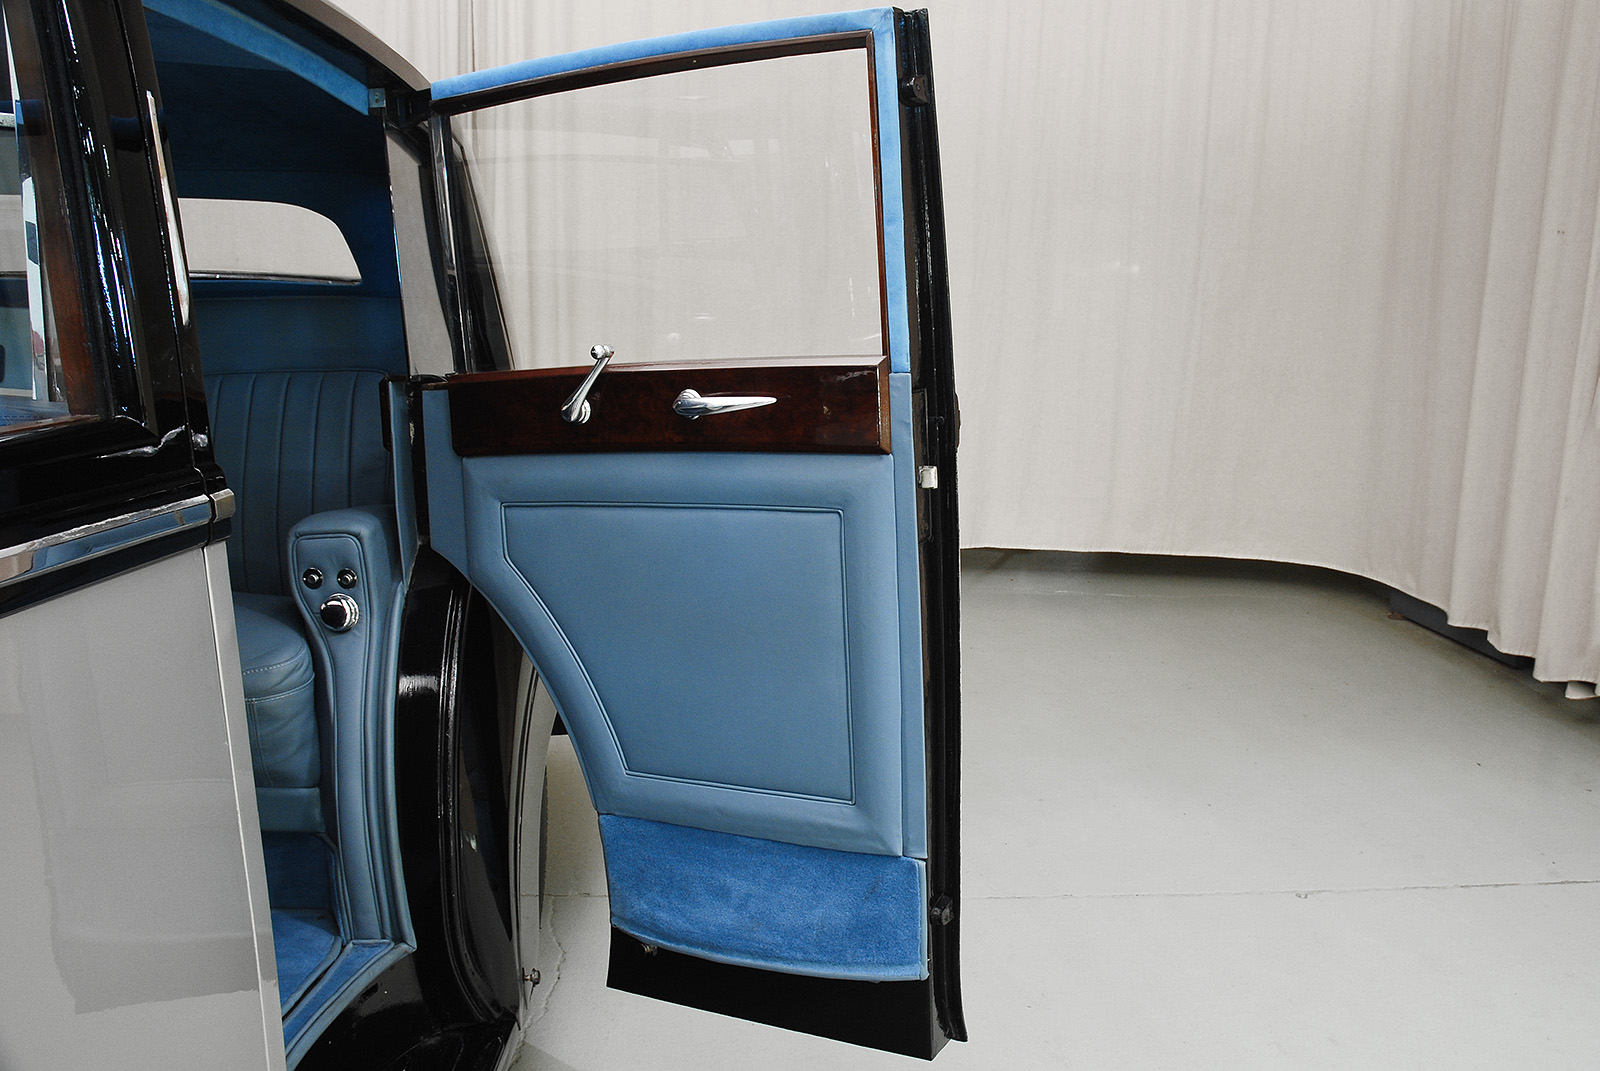 1955 rolls-royce silver wraith coachbuilt